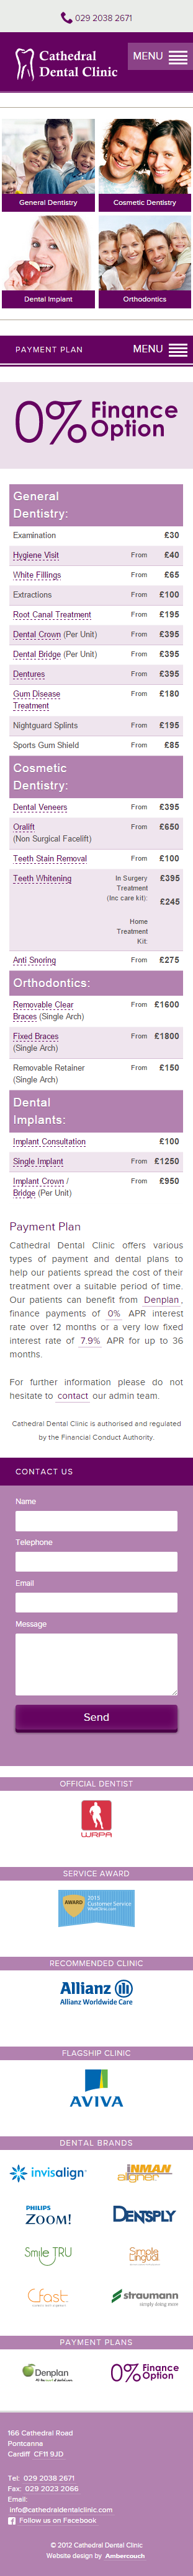 Wordpress mobile website for dentist, price guide.